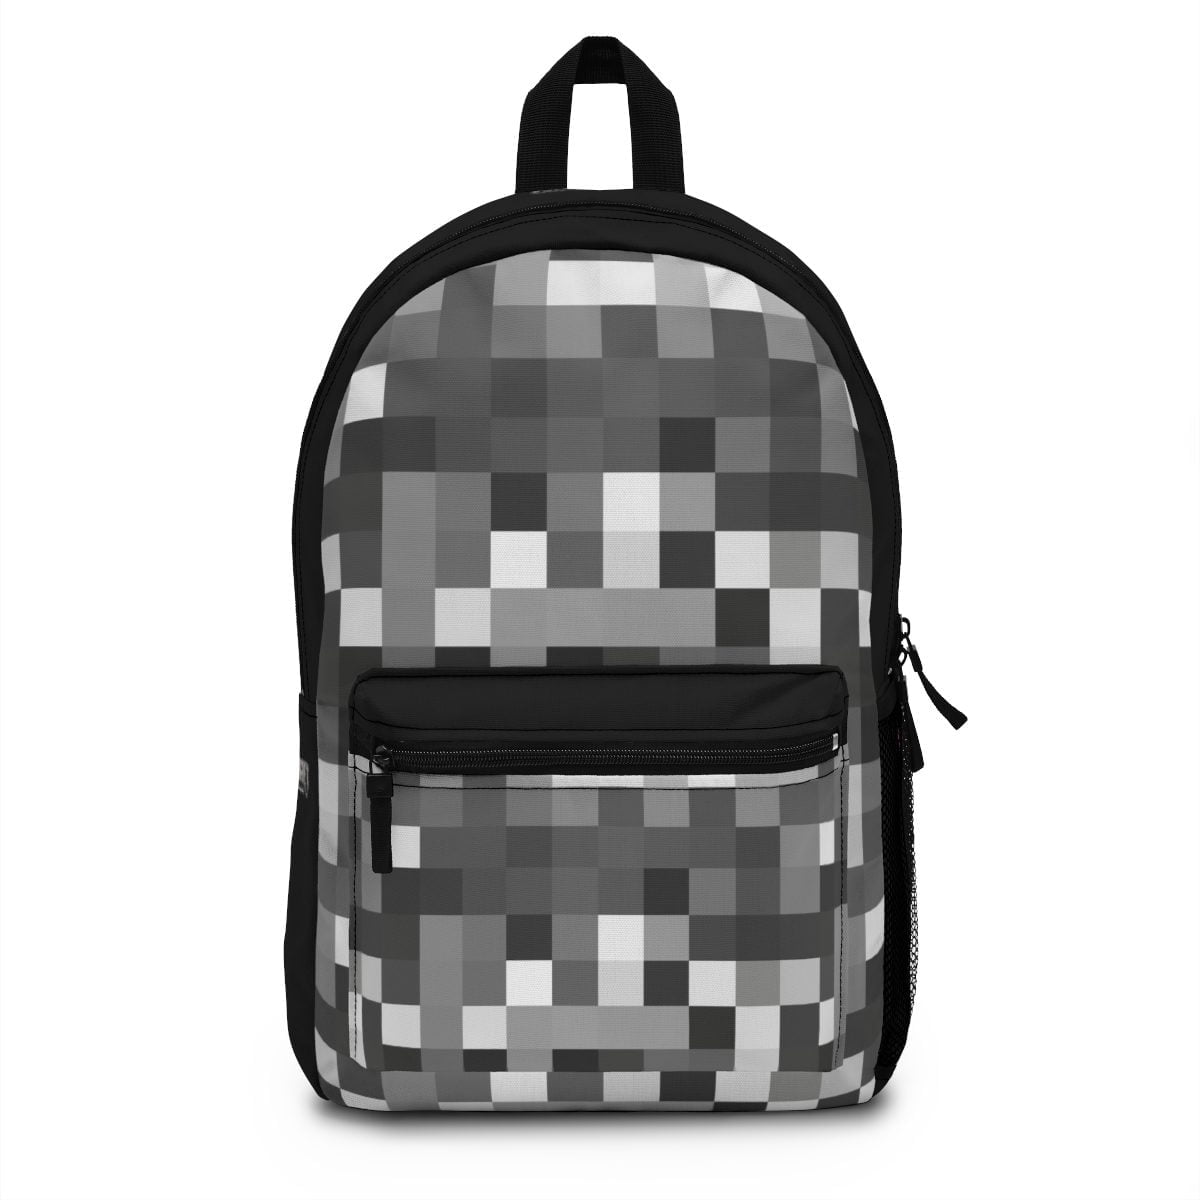 Mega-Craft Big Pixels Minecraft Black and Grey Backpack Cool Kiddo 10